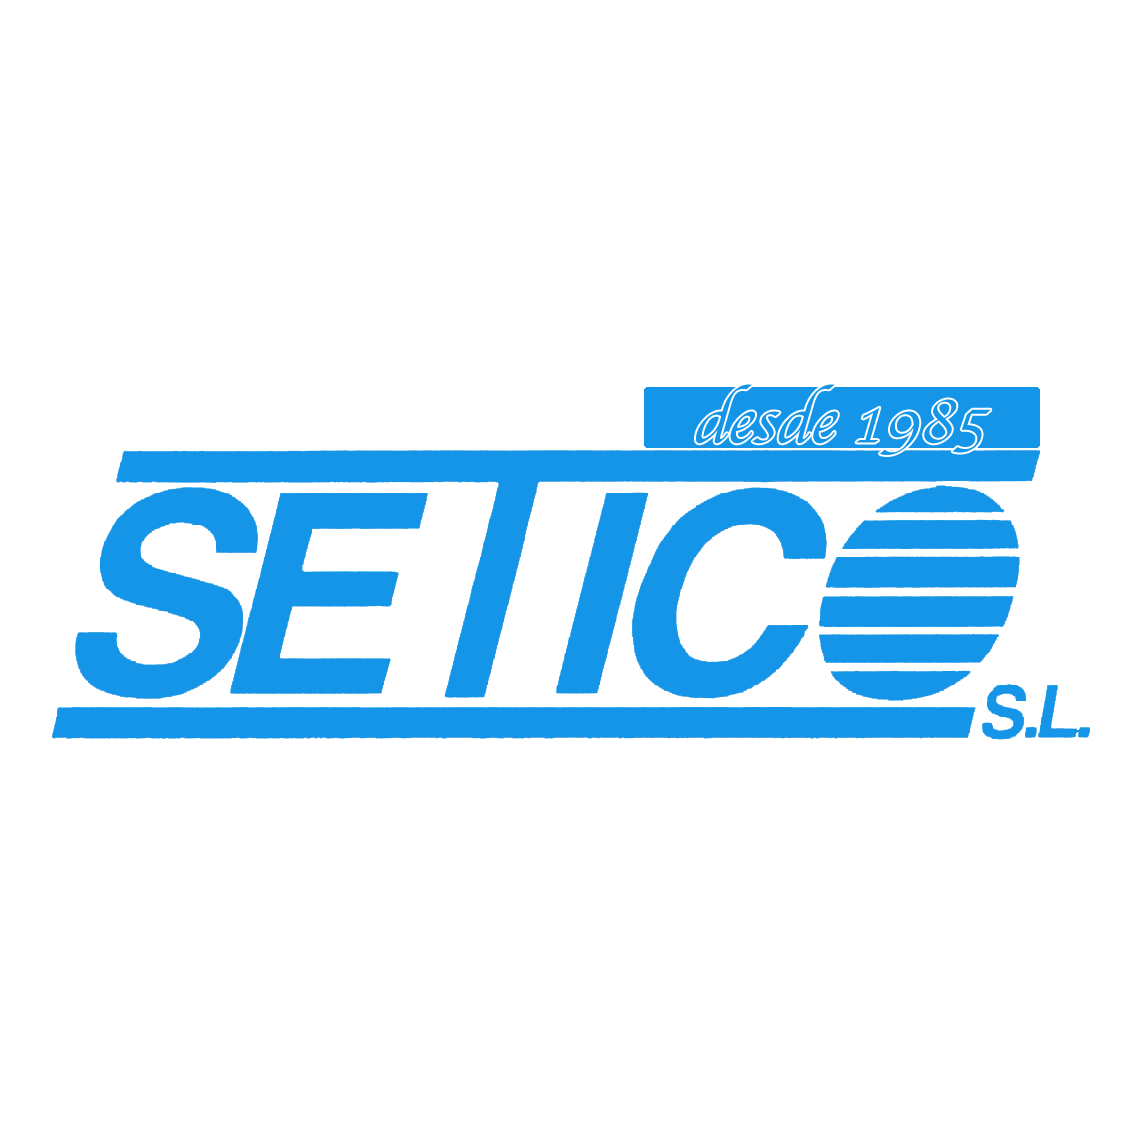 Setico S.L. Logo